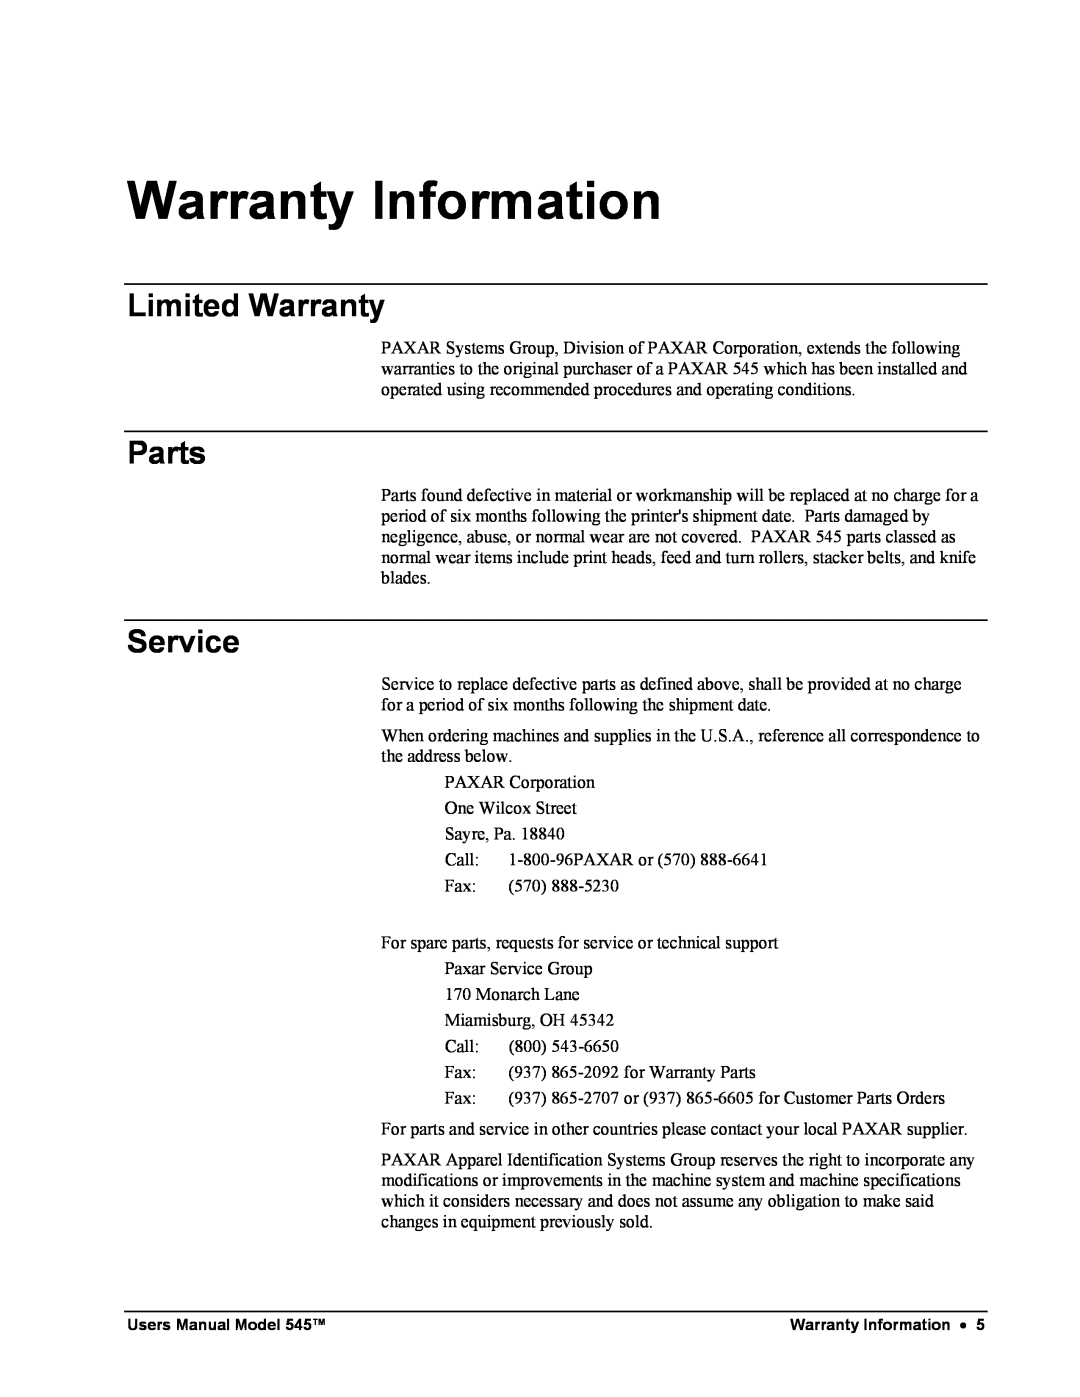 Paxar 545 user manual Warranty Information, Limited Warranty, Parts, Service 